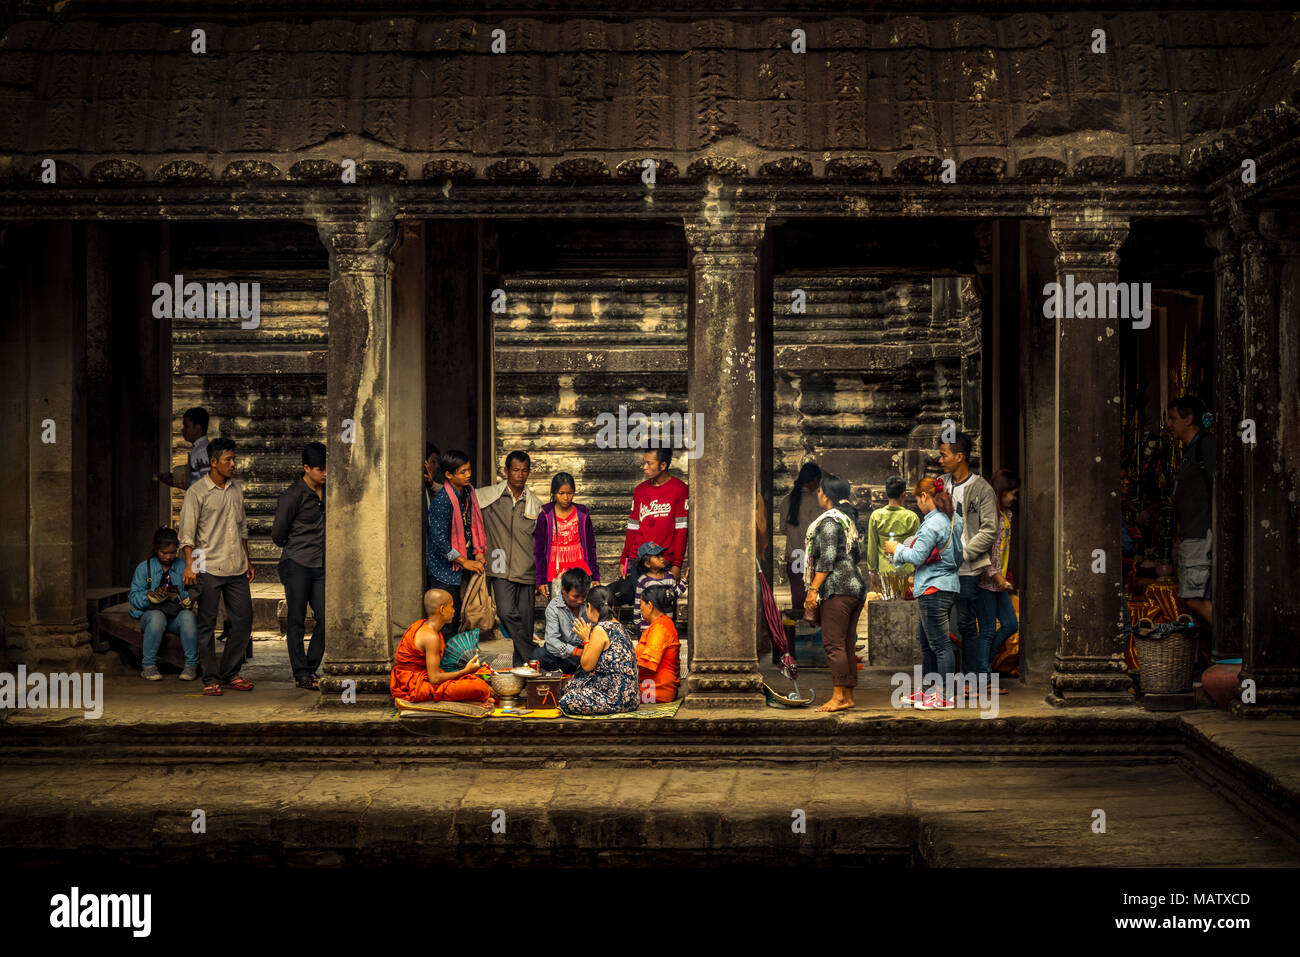 Asien, Kambodscha, Angkor Wat Foto de stock